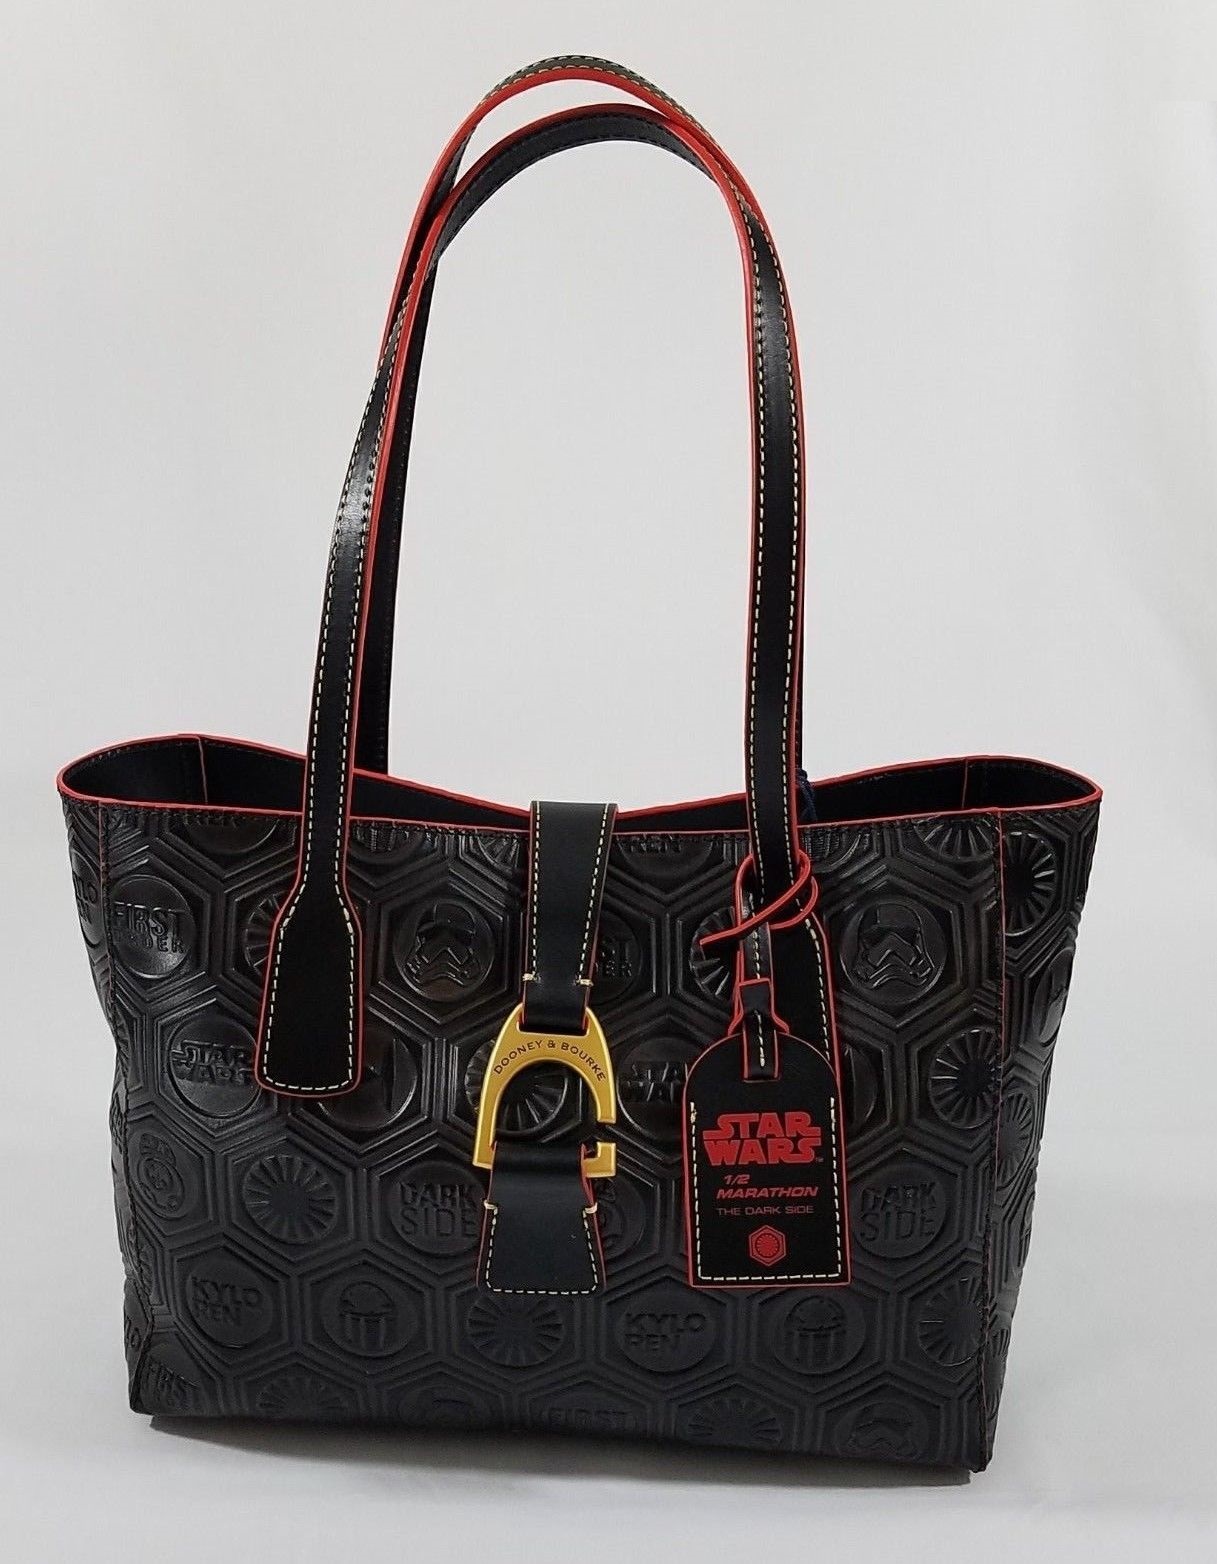 Dooney & Bourke x Star Wars Run Disney 2018 Handbags on Ebay